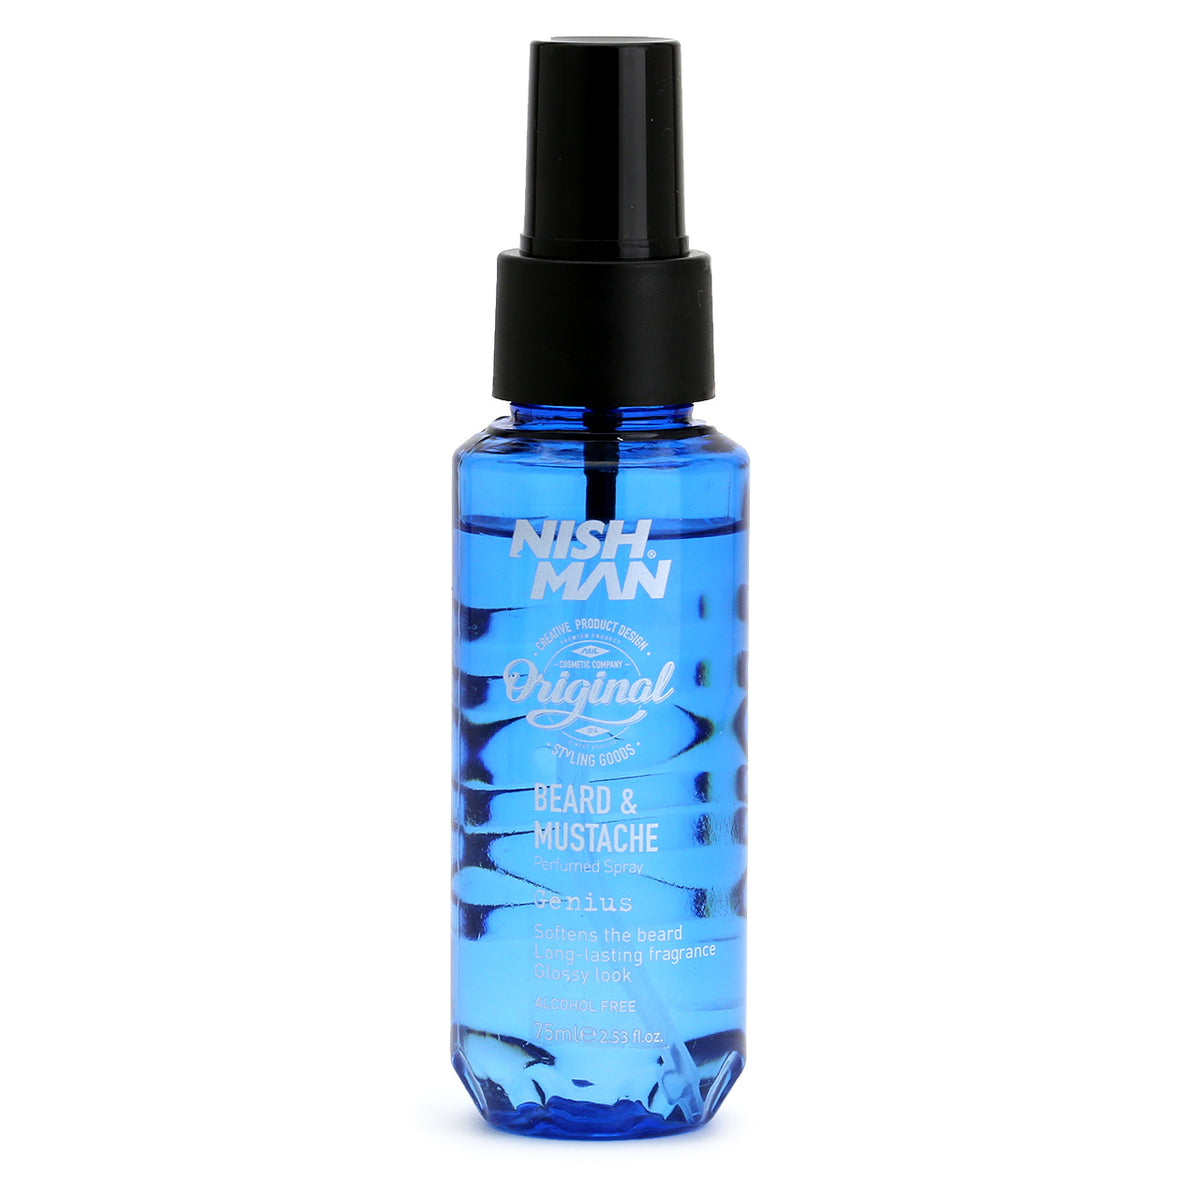 Nishman Perfumed Beard Spray, Genius, in a mainly-blue spray bottle